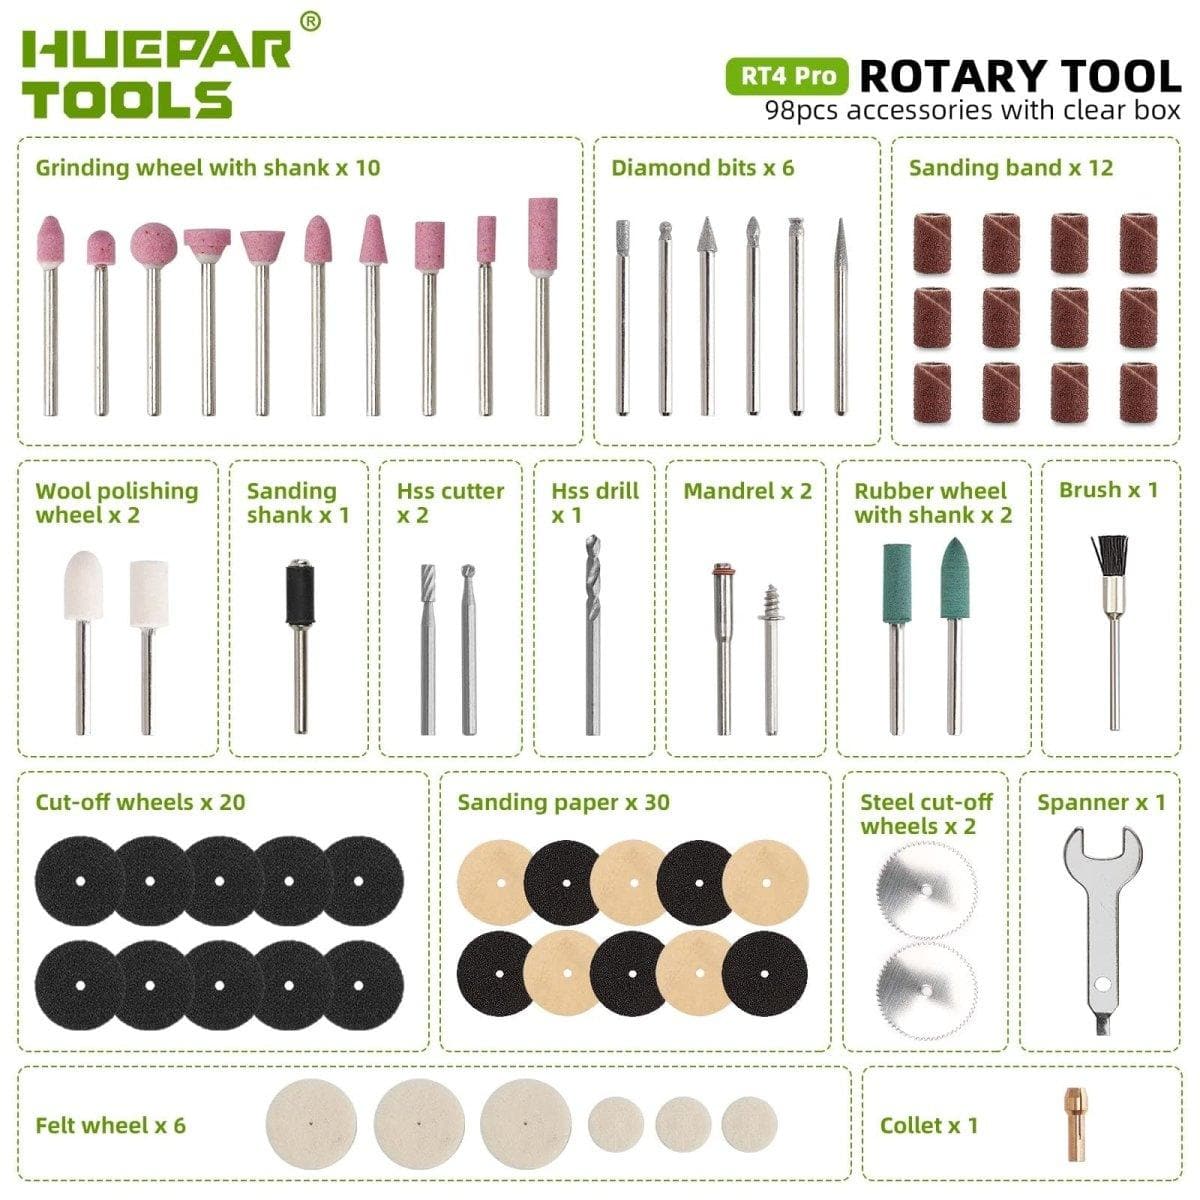 Huepar RT4 Pro - Mini Power Rotary Tool - HUEPAR US